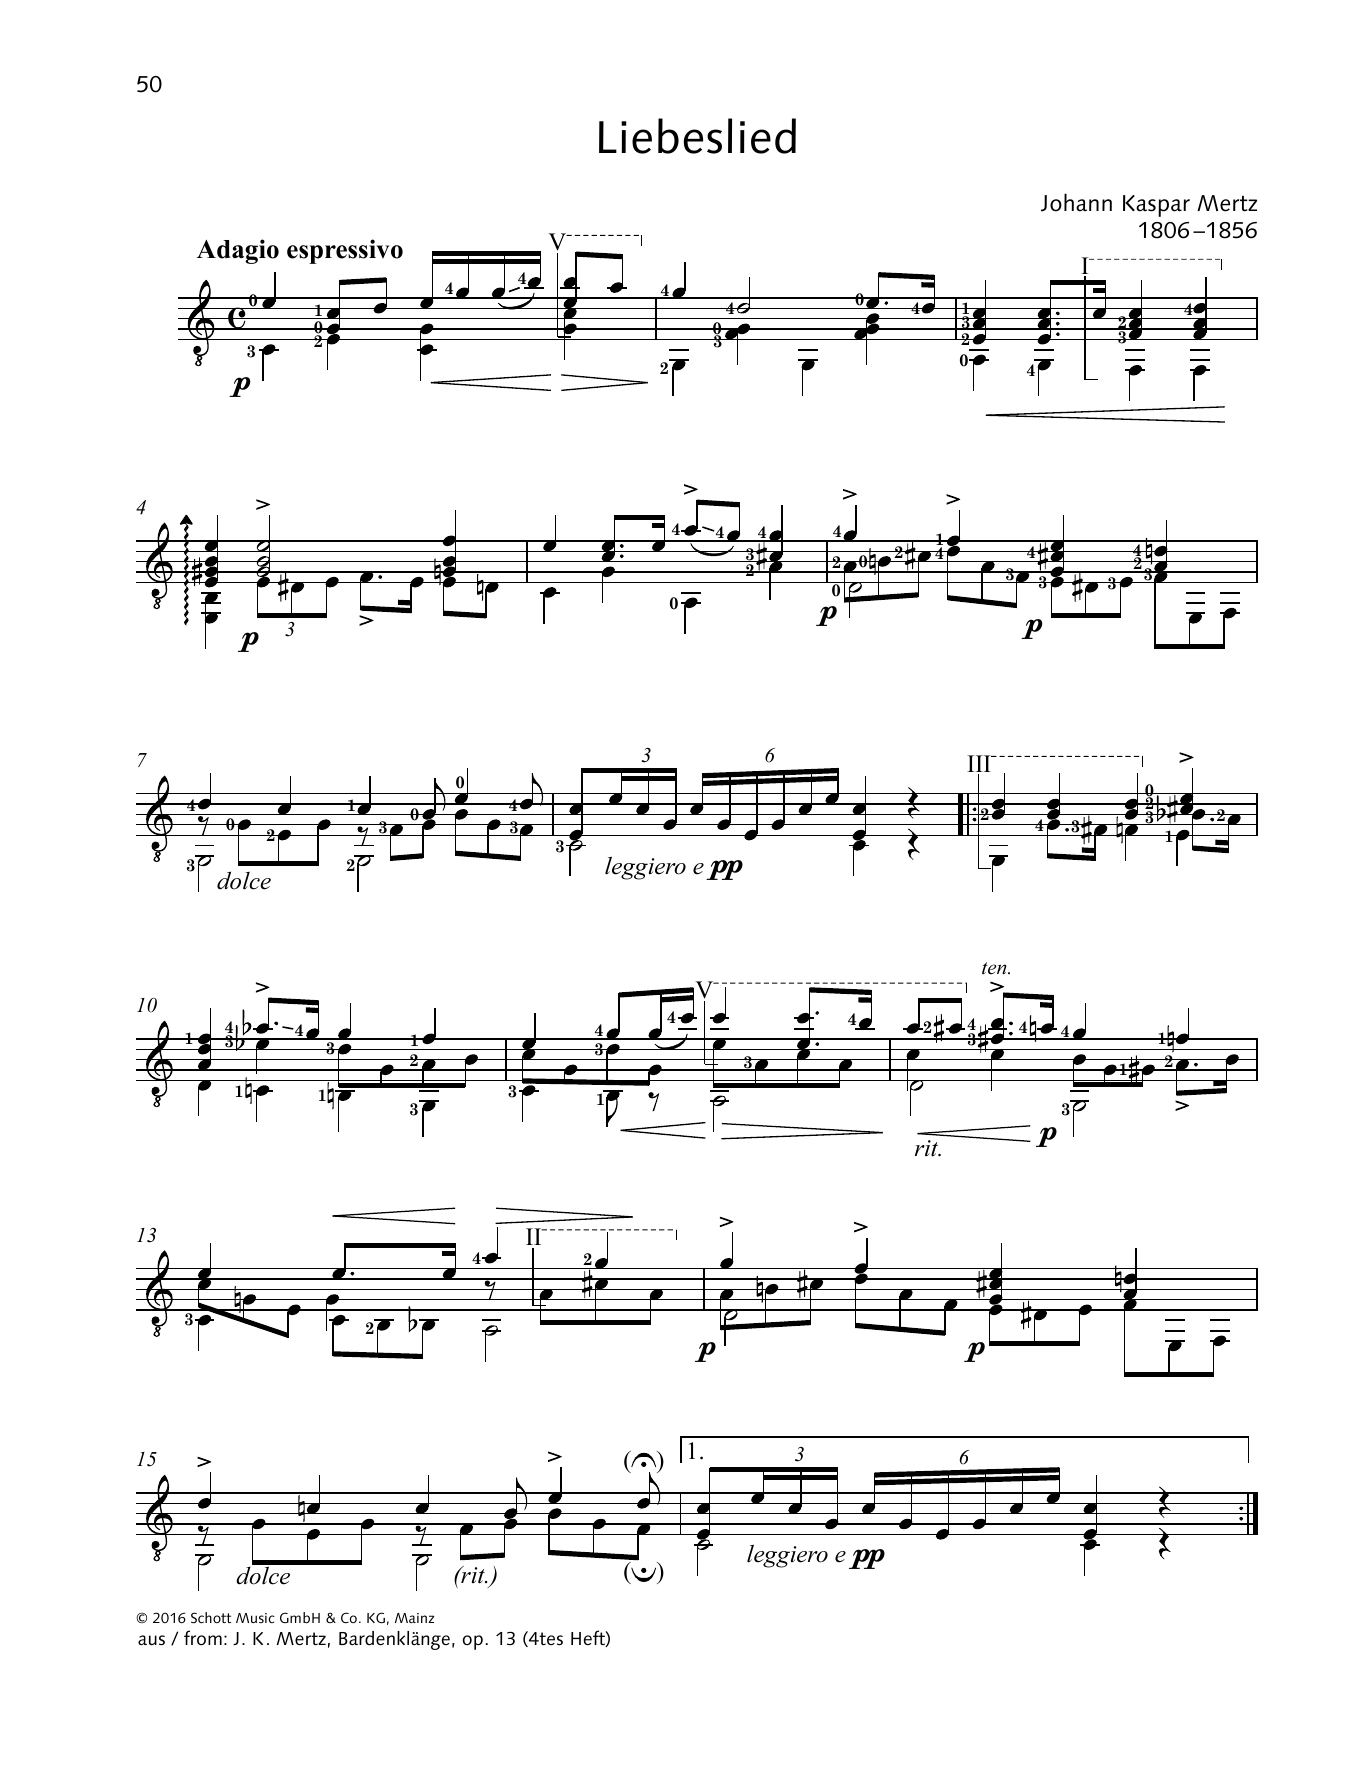 Johann Kaspar Mertz Liebeslied Sheet Music Notes & Chords for Solo Guitar - Download or Print PDF